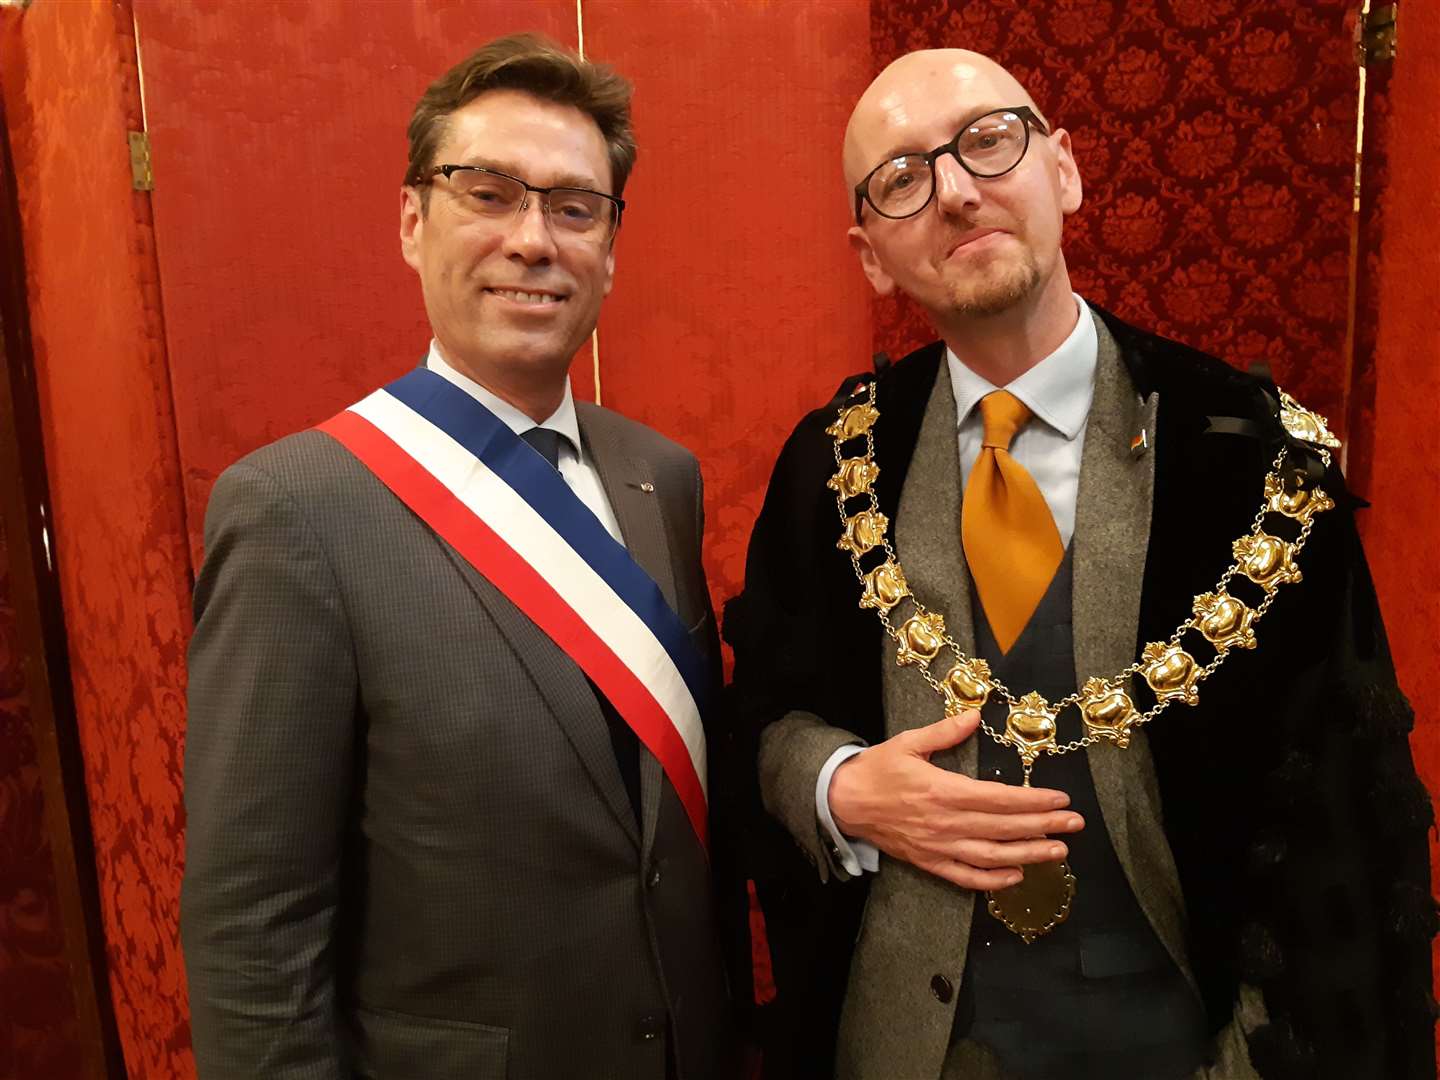 Cllr Howden with Calais deputy mayor Phillipe Mignonet